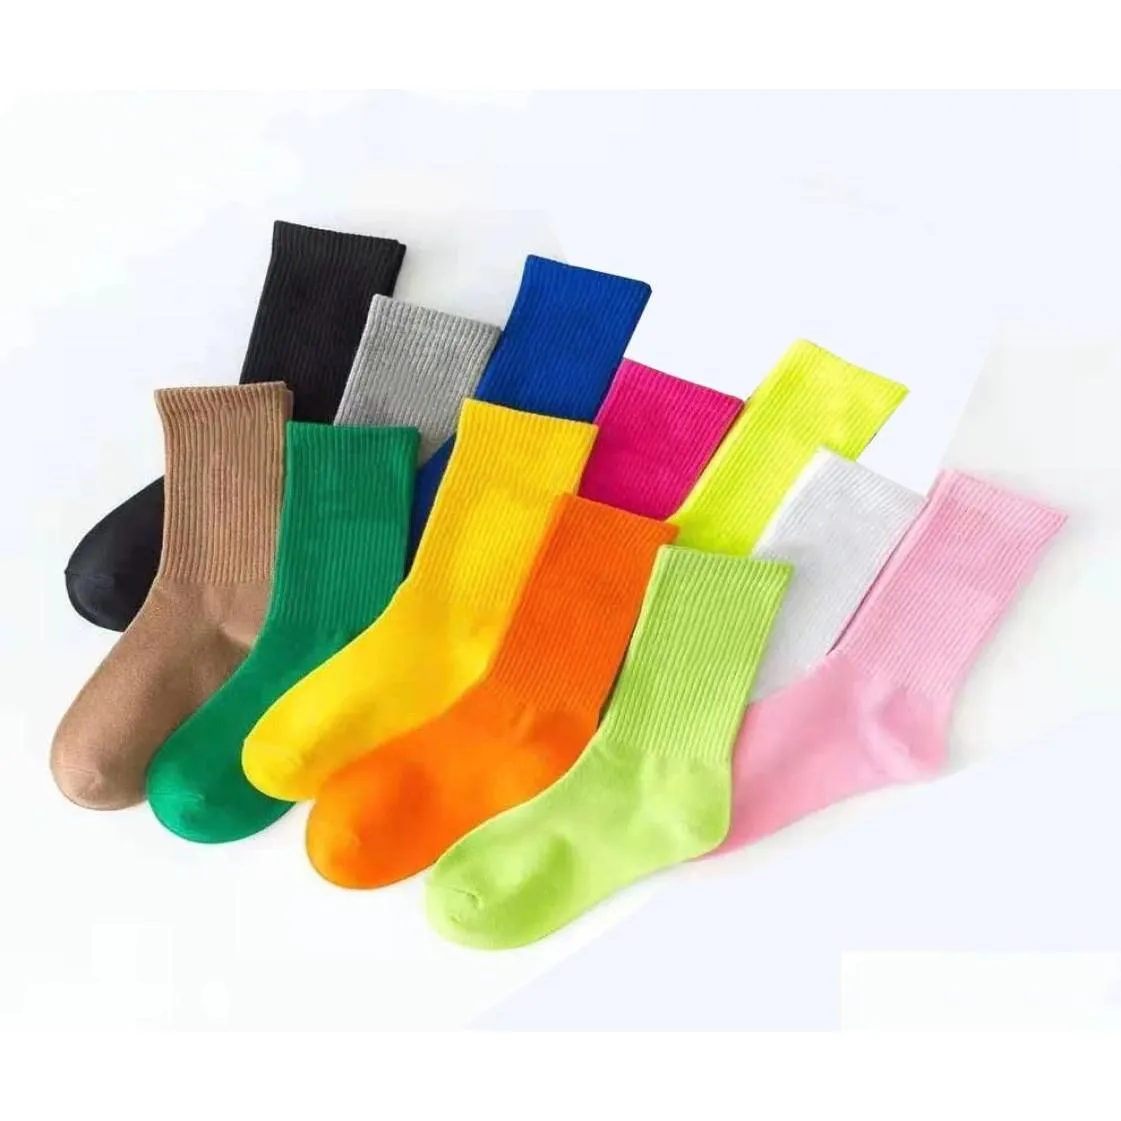 Designer Design Luxury stocking Mens Womens Socks 100 Cotton stockings high quality Cute comfortable Long sock letter pattern 12